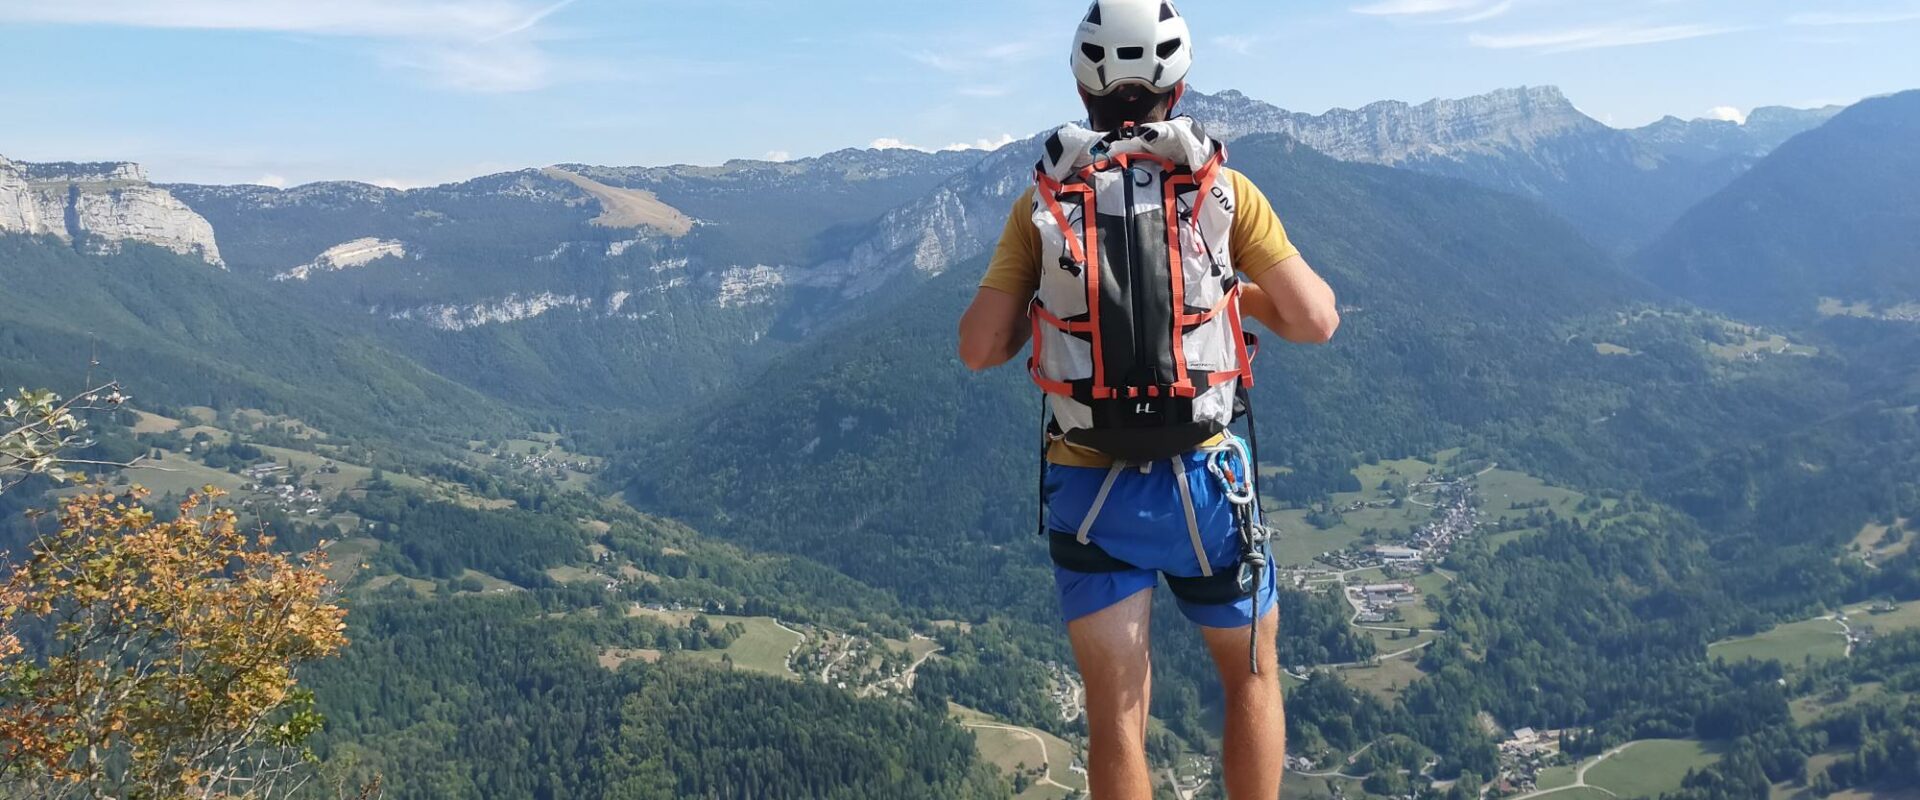 Test Sac Alpinisme Ferrino